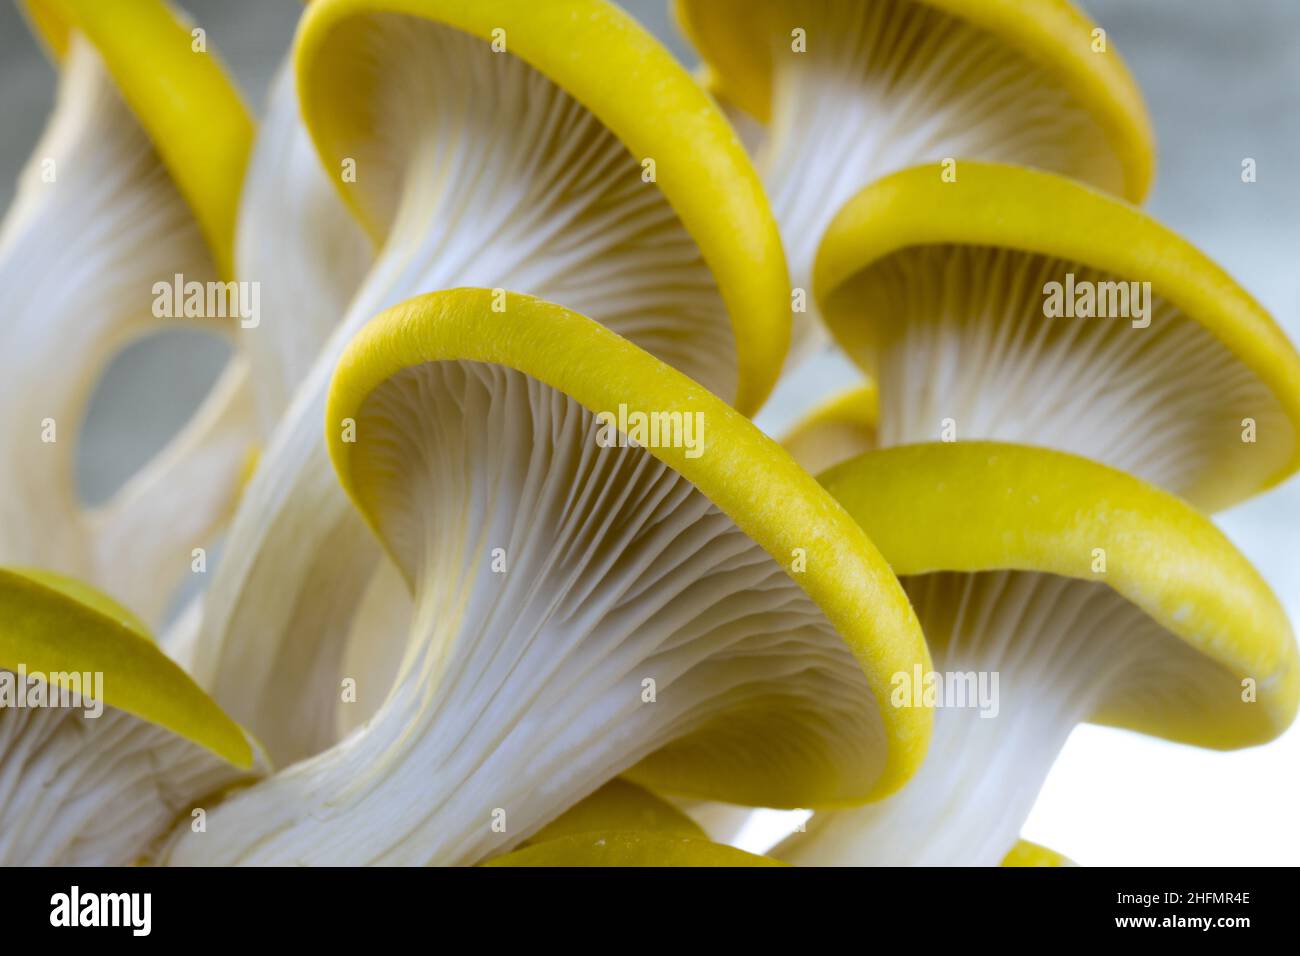 Yellow Oyster mushrooms macro close up, Pleurotus citrinopileatus, fresh and raw Stock Photo